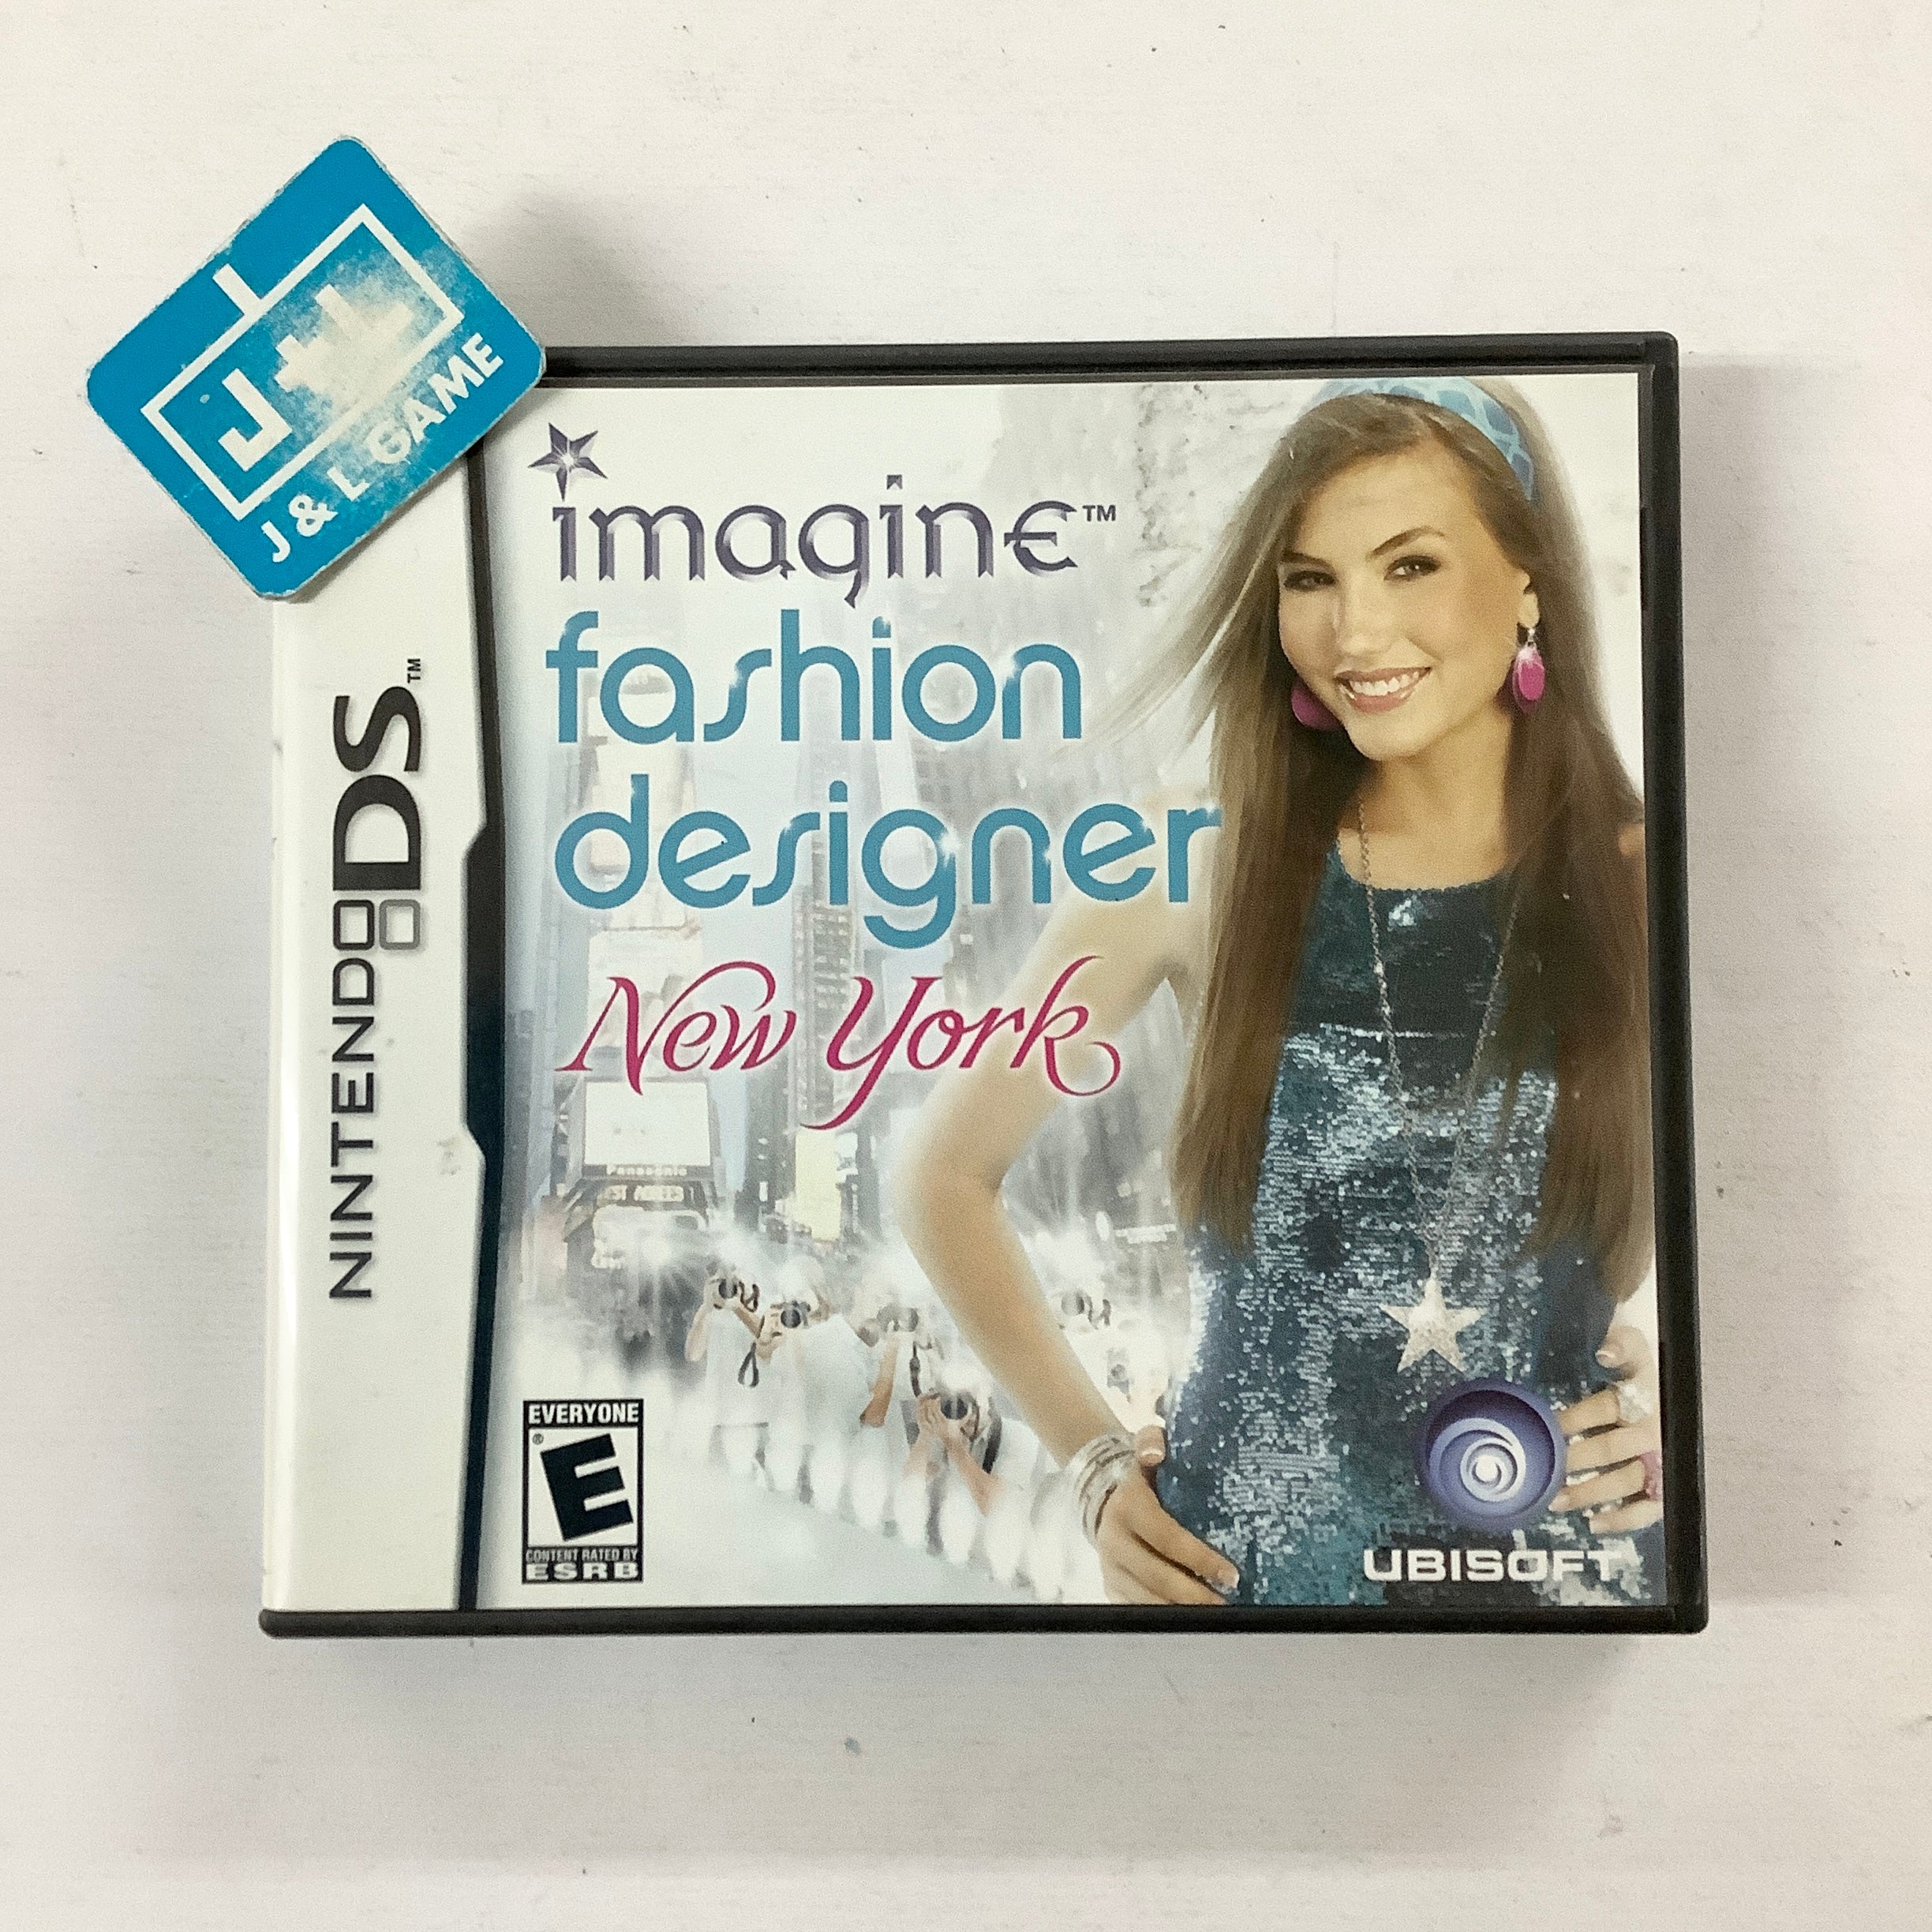 Imagine Fashion Designer New York - (NDS) Nintendo DS [Pre-Owned] Video Games Ubisoft   